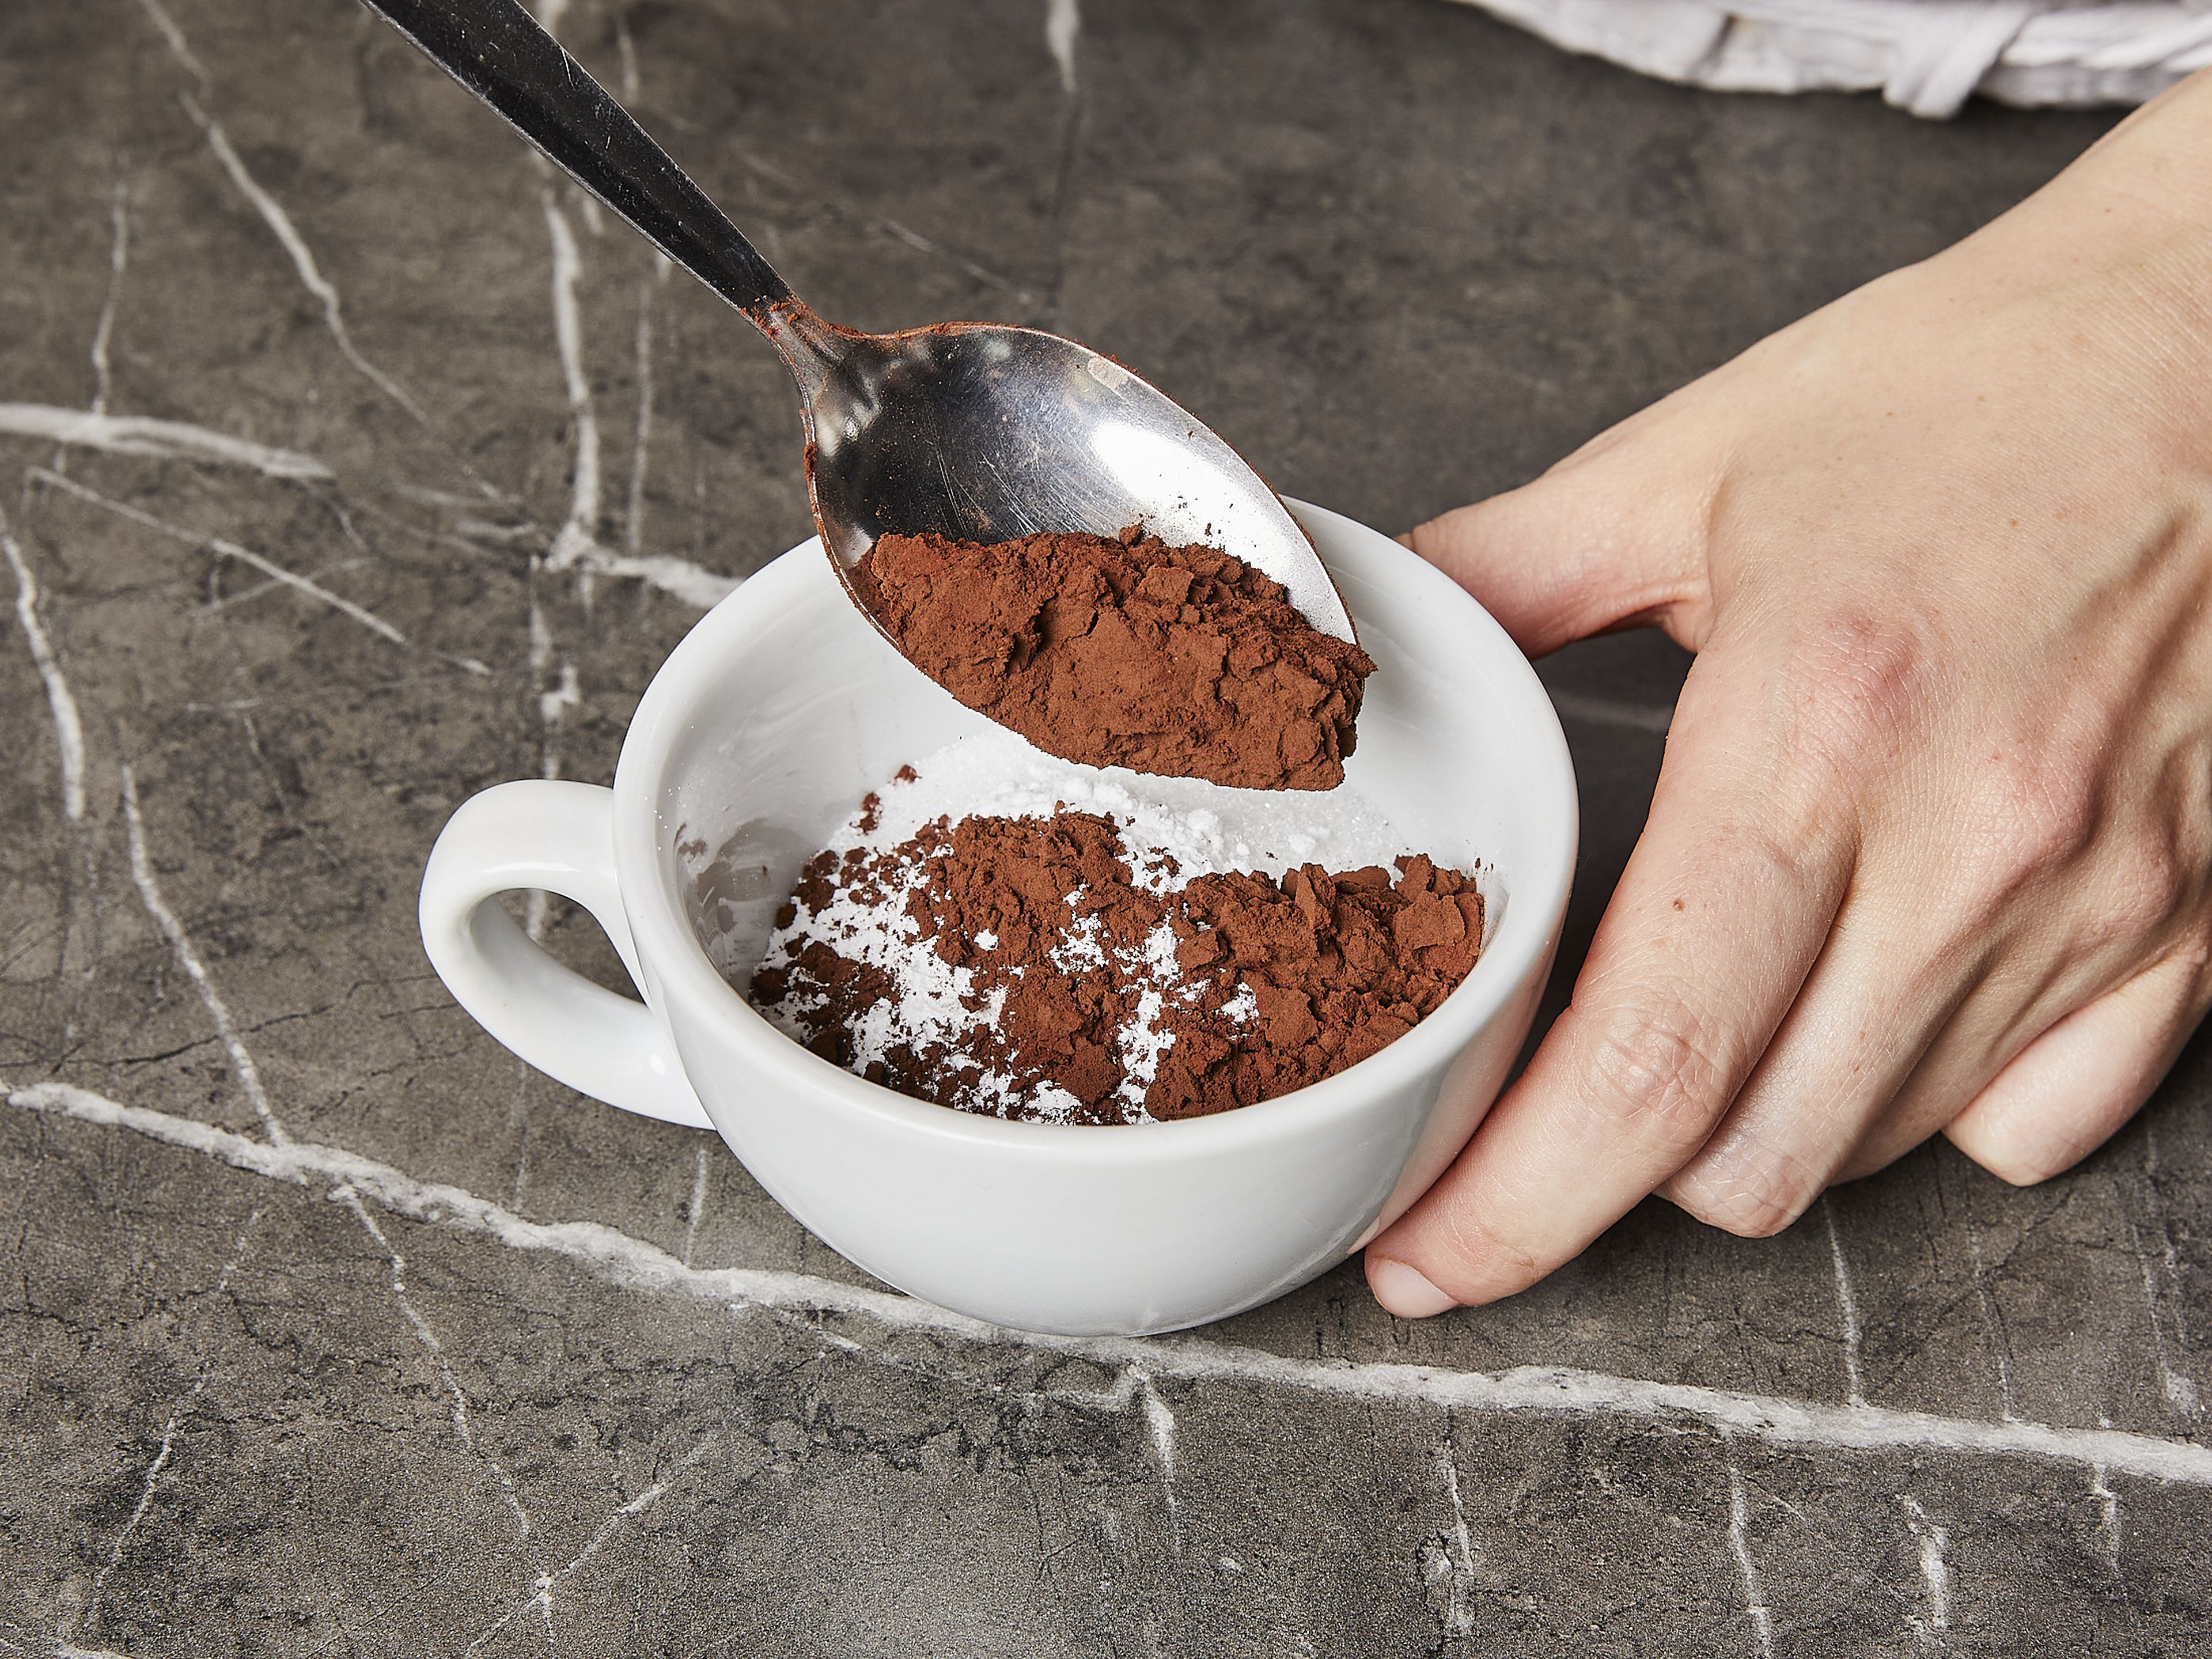 Mix flour, sugar, cocoa powder, baking powder, and salt in the mug.